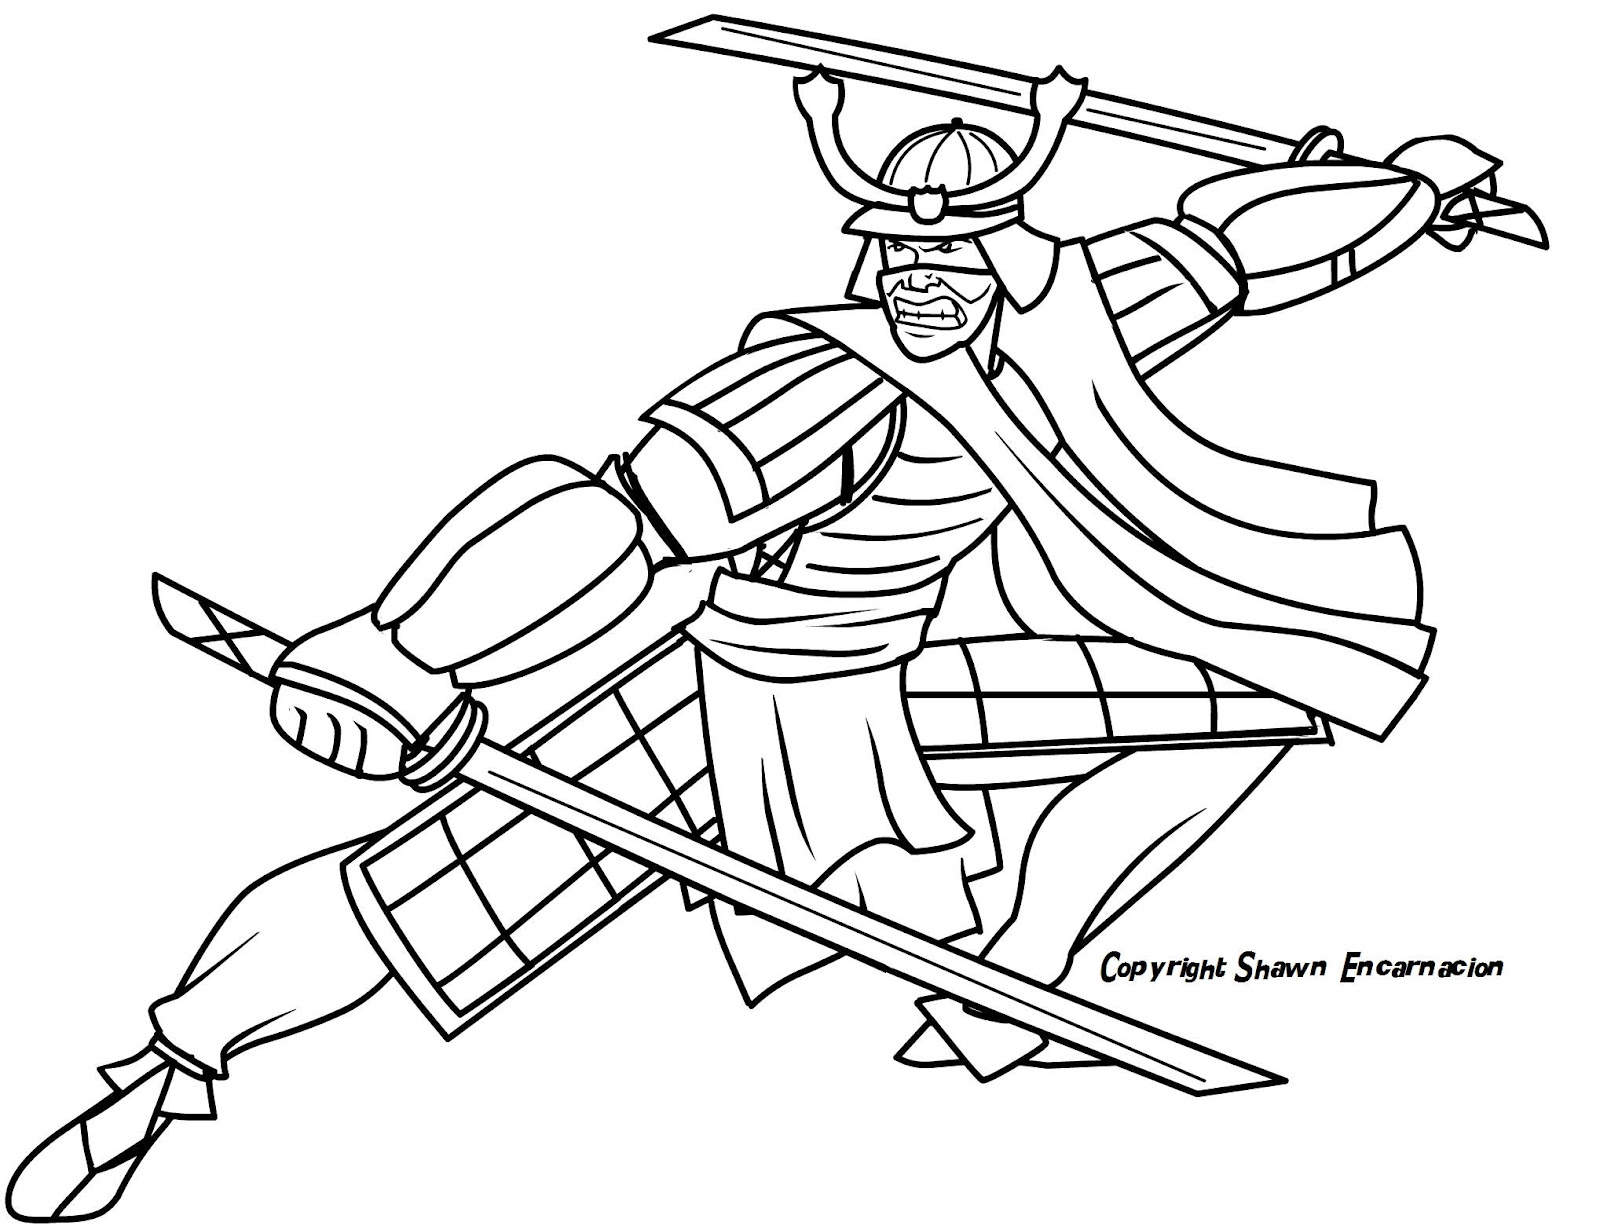 Drawings Samurai (Characters) – Printable coloring pages